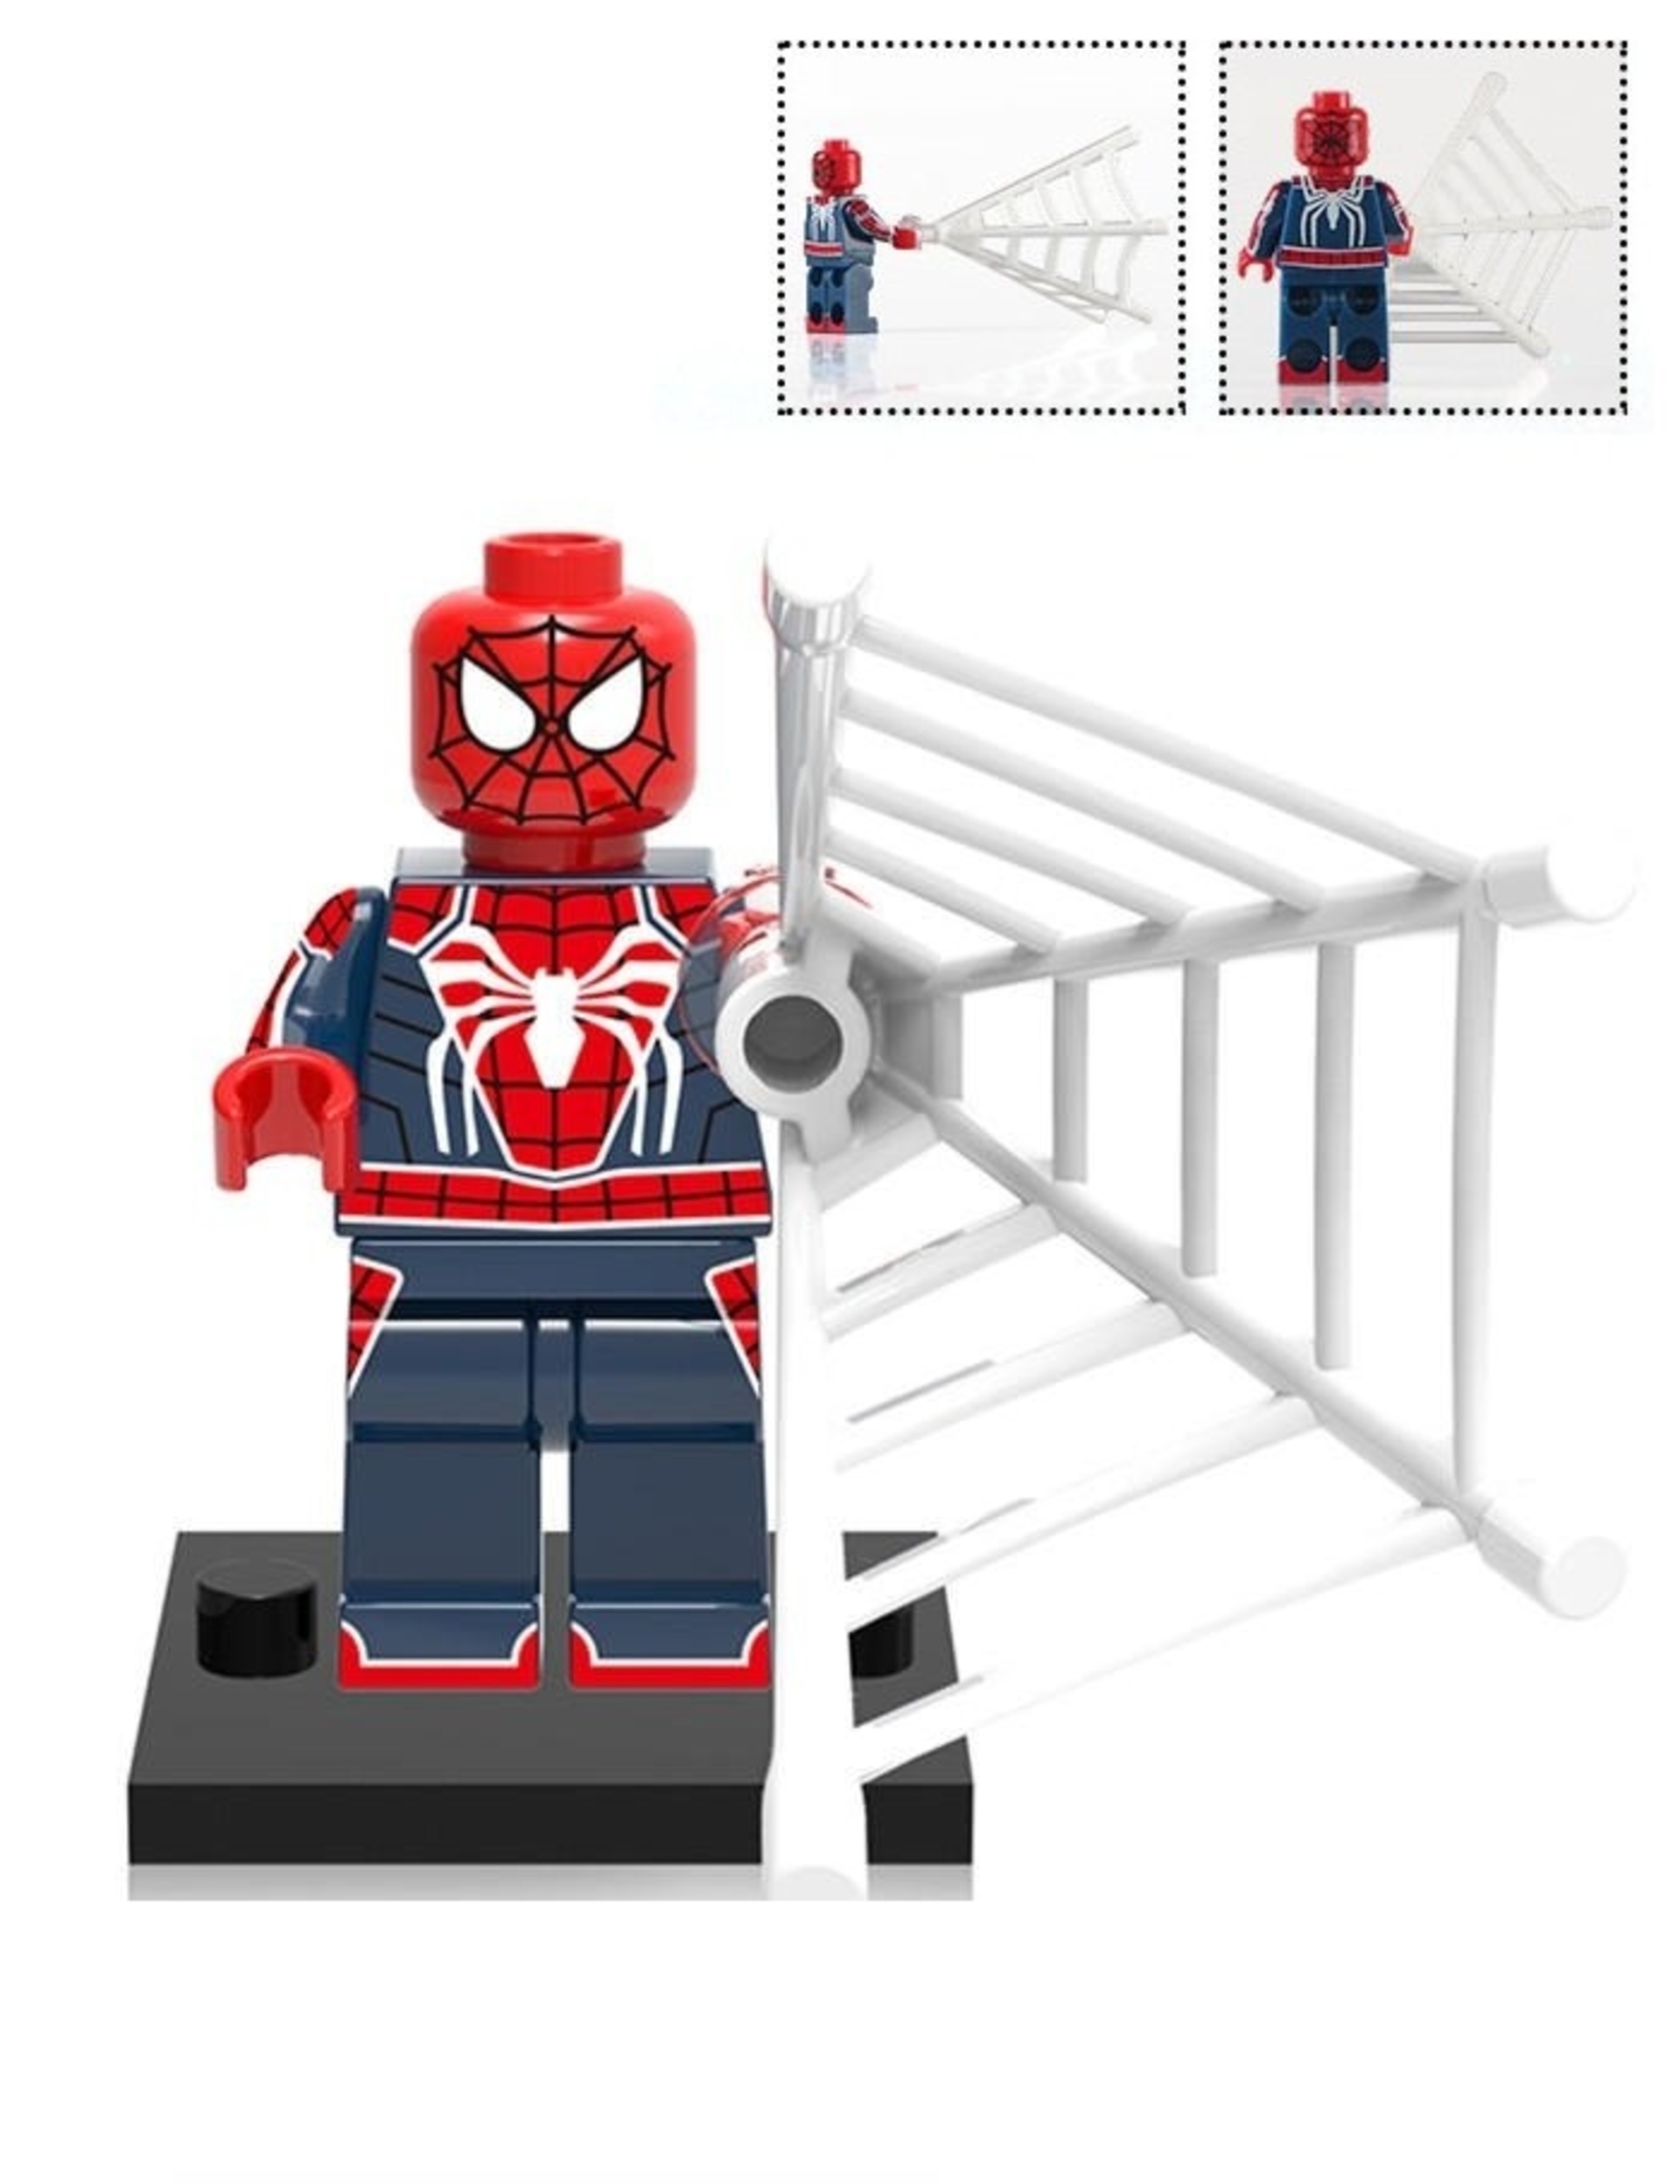 Spider Man Ps4 Lego Figure New Daily Offers Sultanmarketim Com